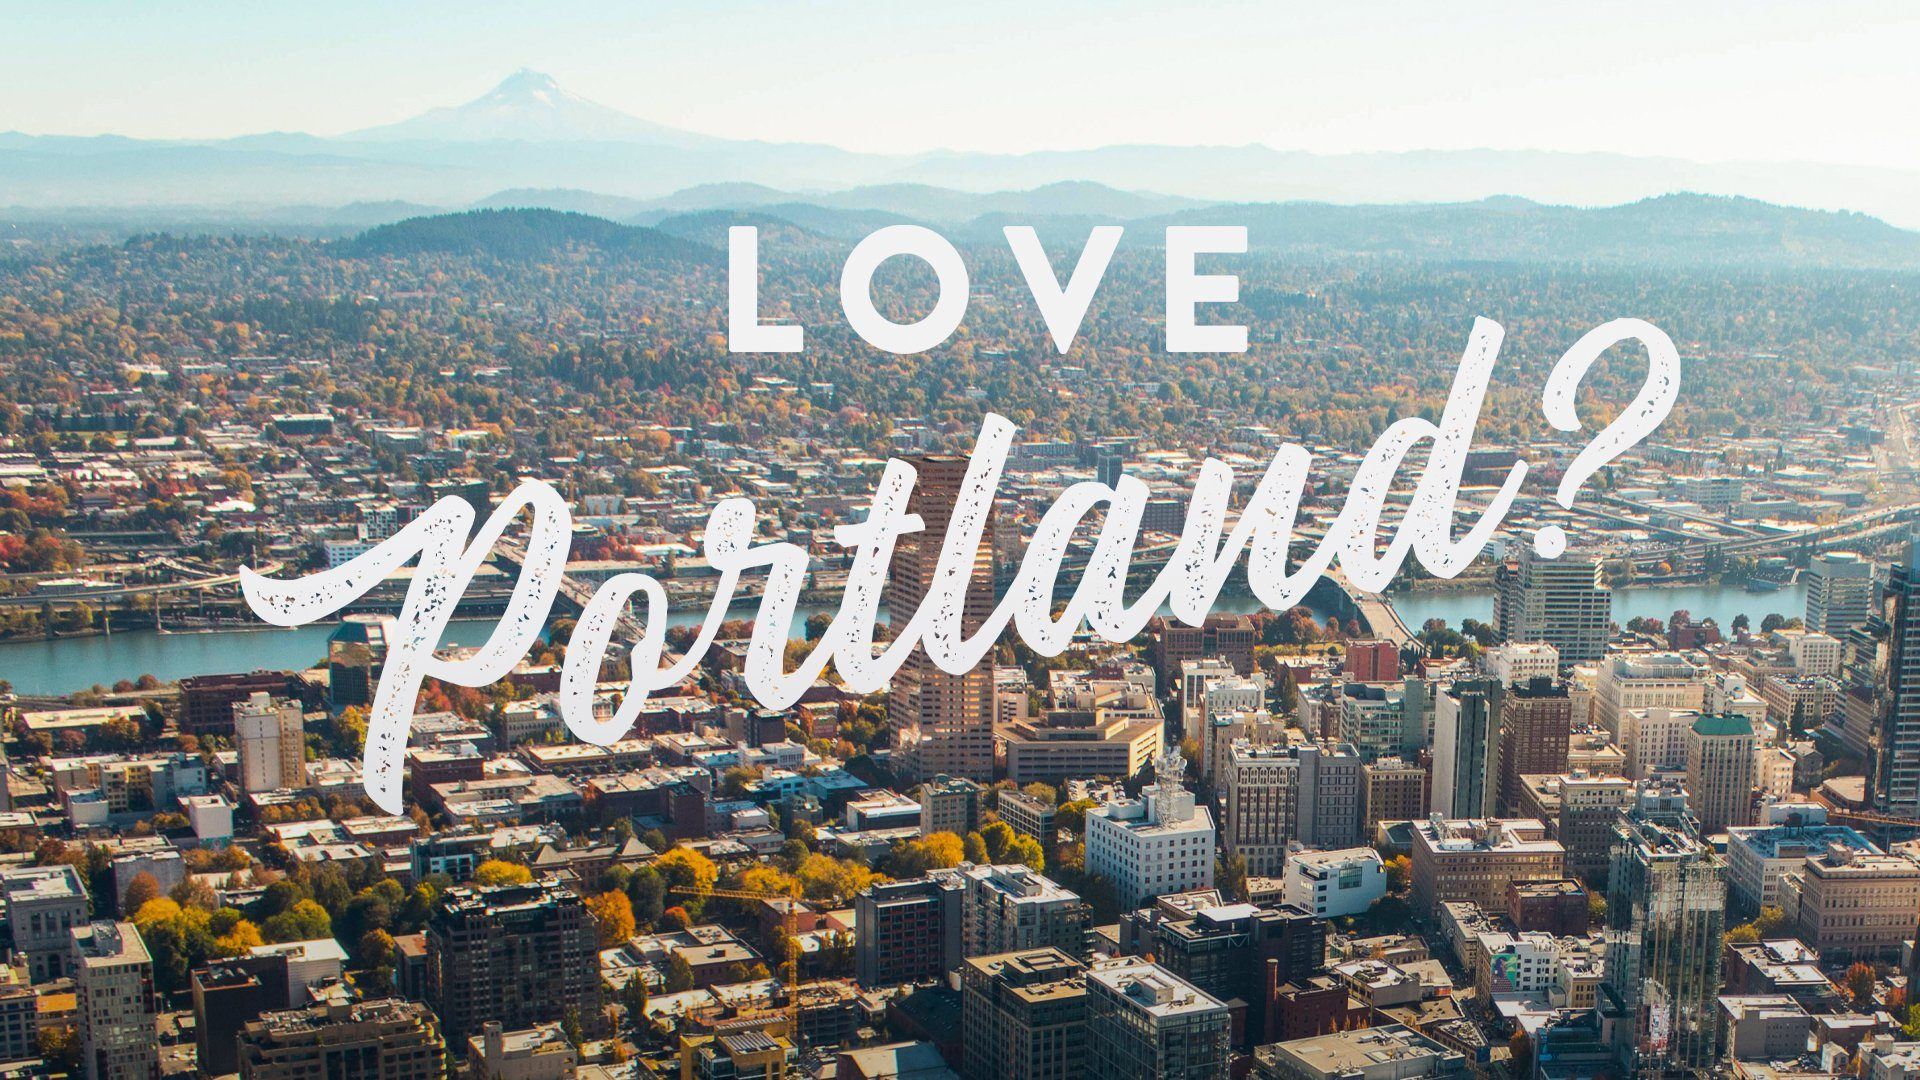 Love Portland? We Do Too. - Portland Gear